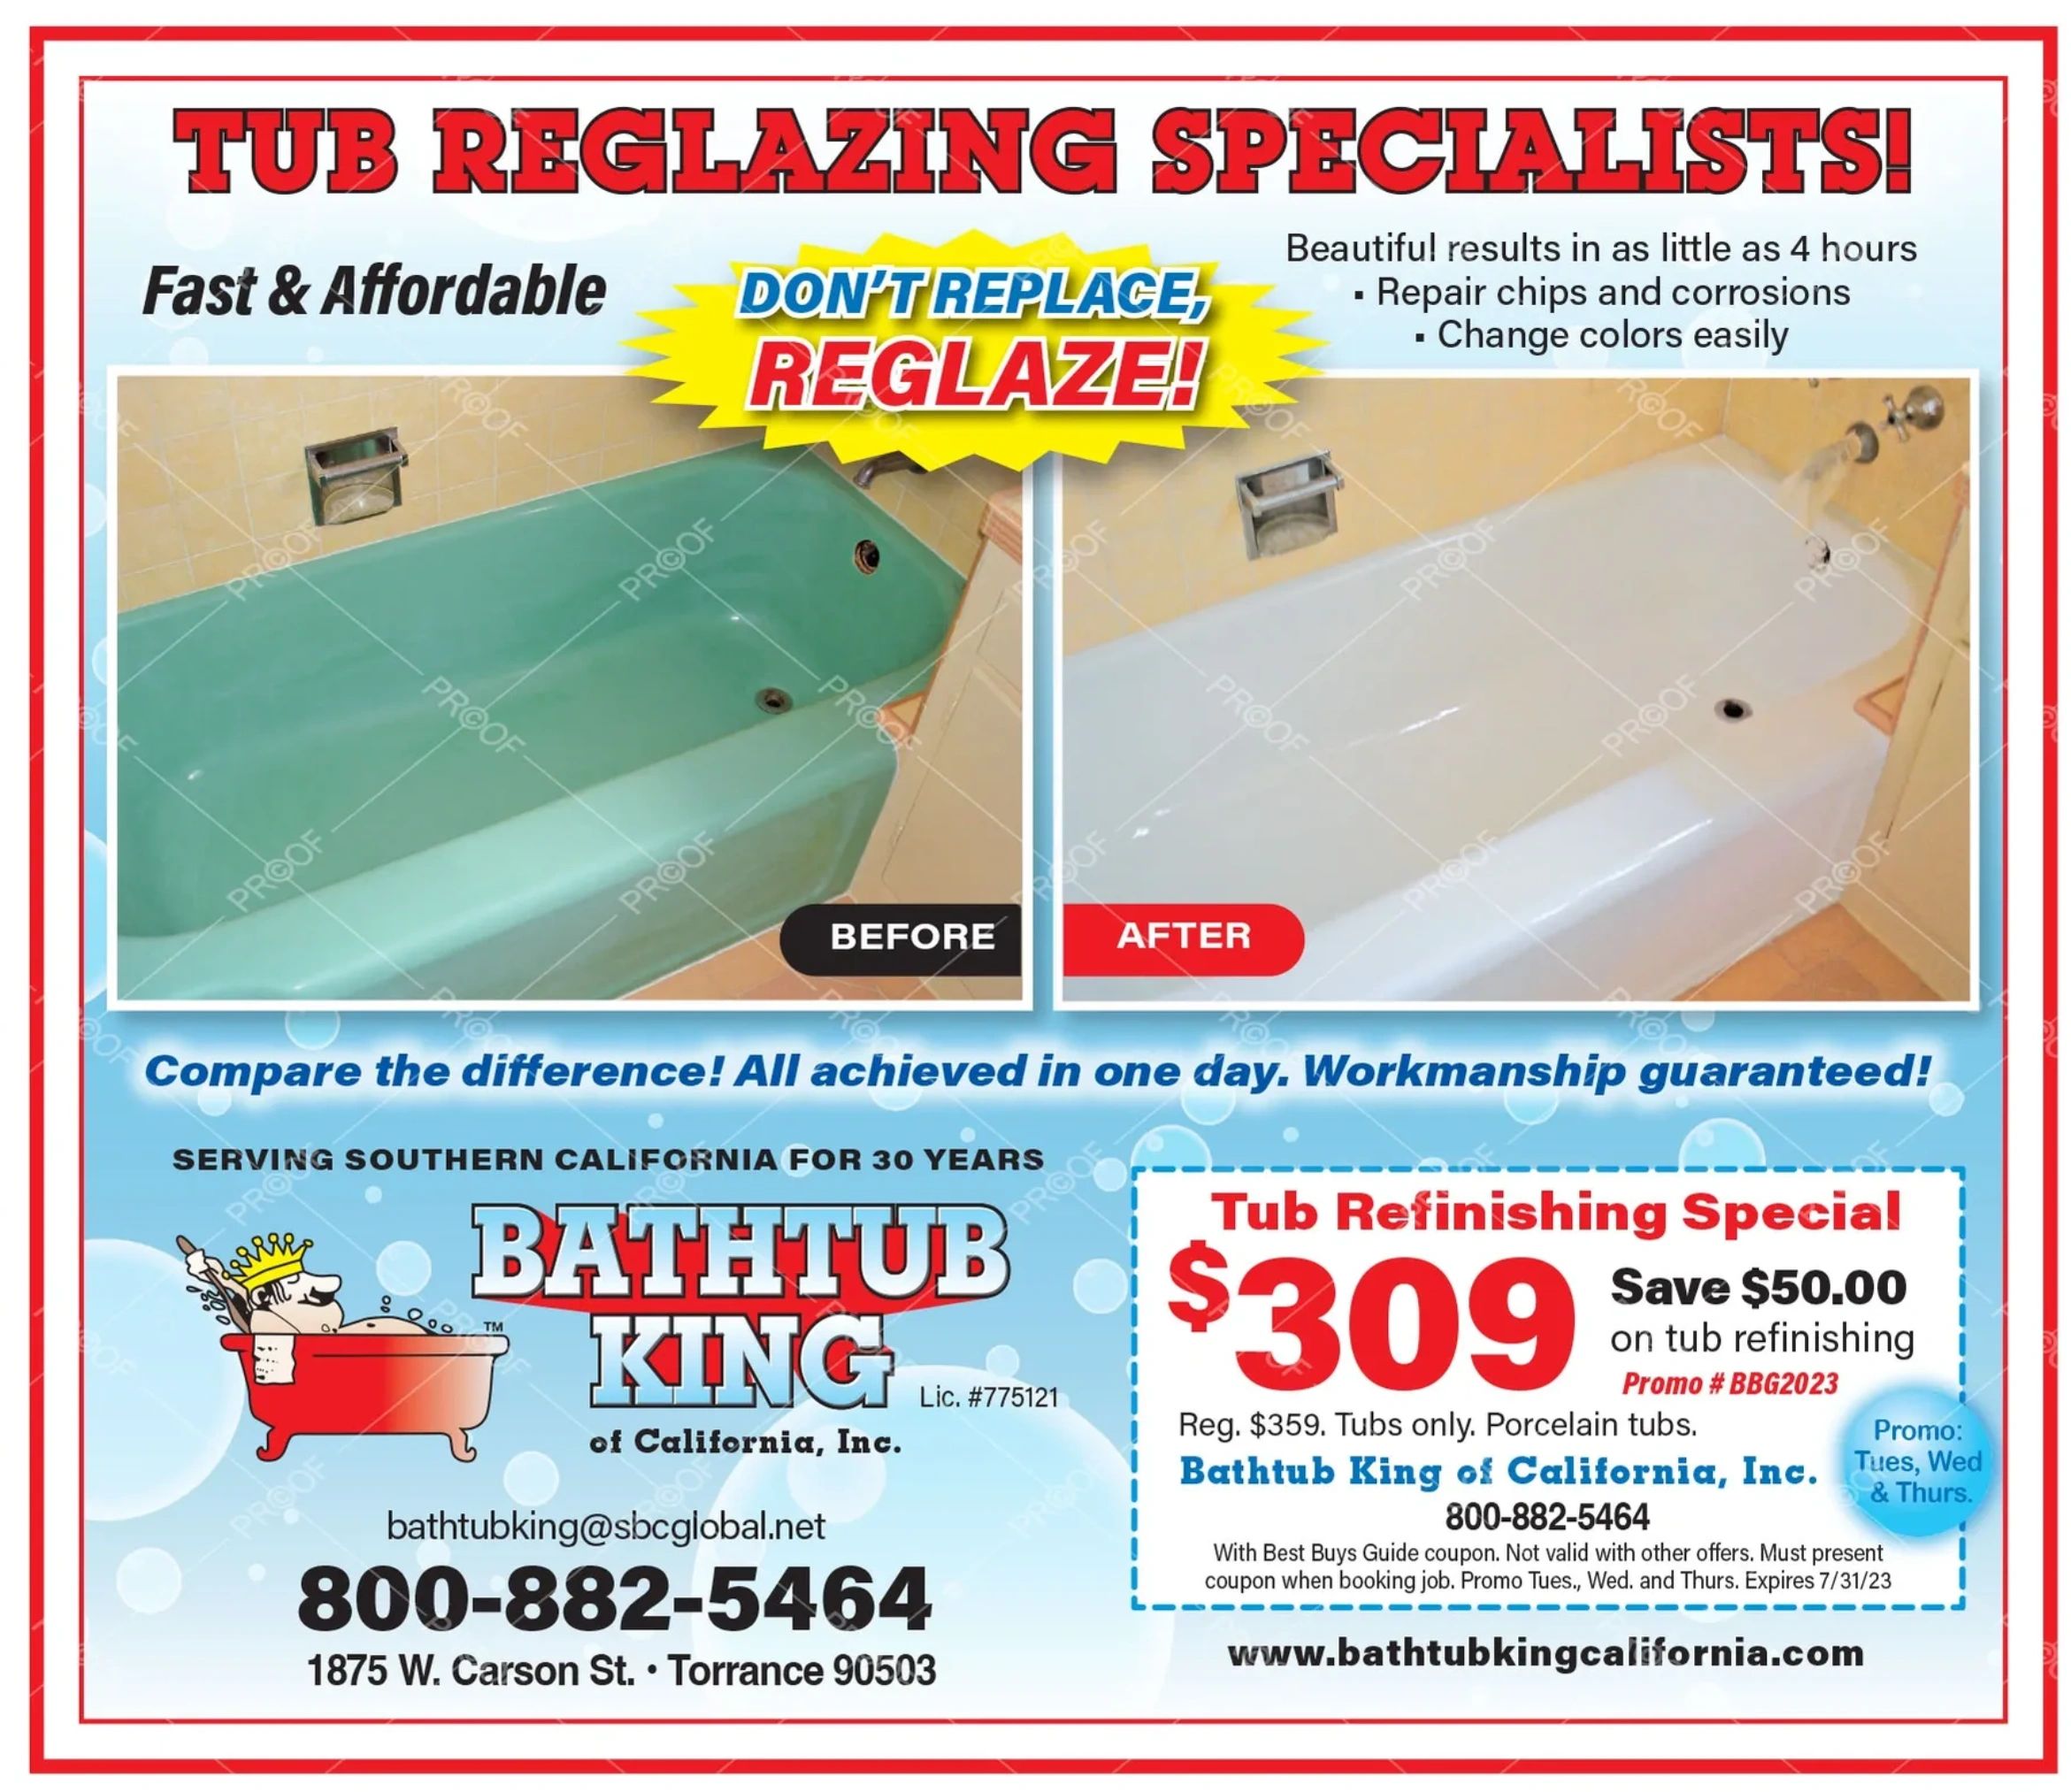 Bathtub King Specials